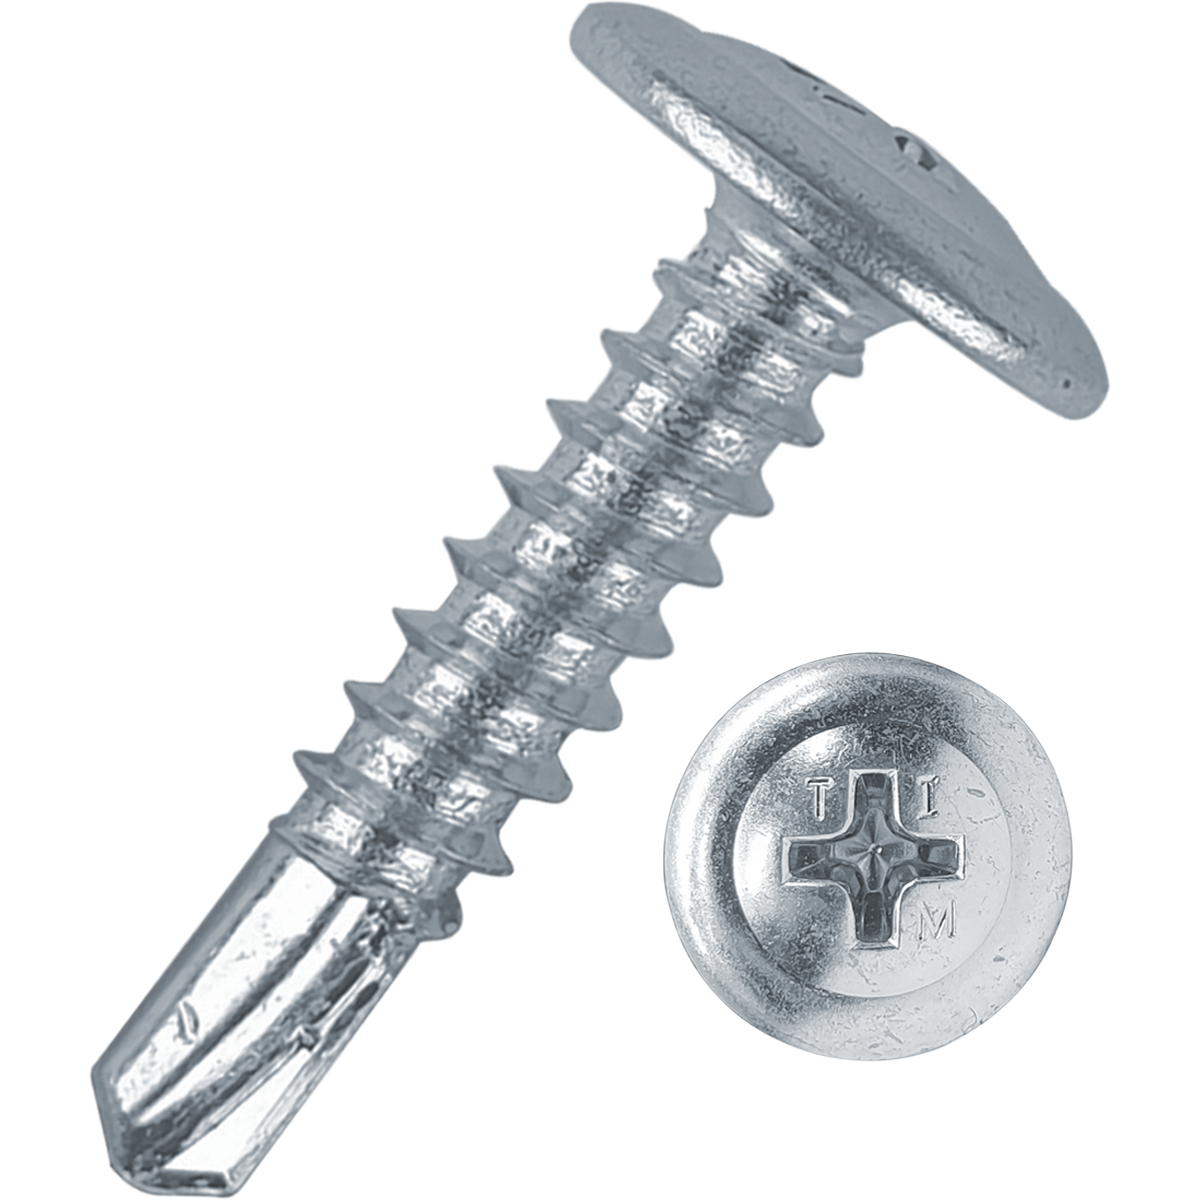 phillips screwdriver sharpener clipart